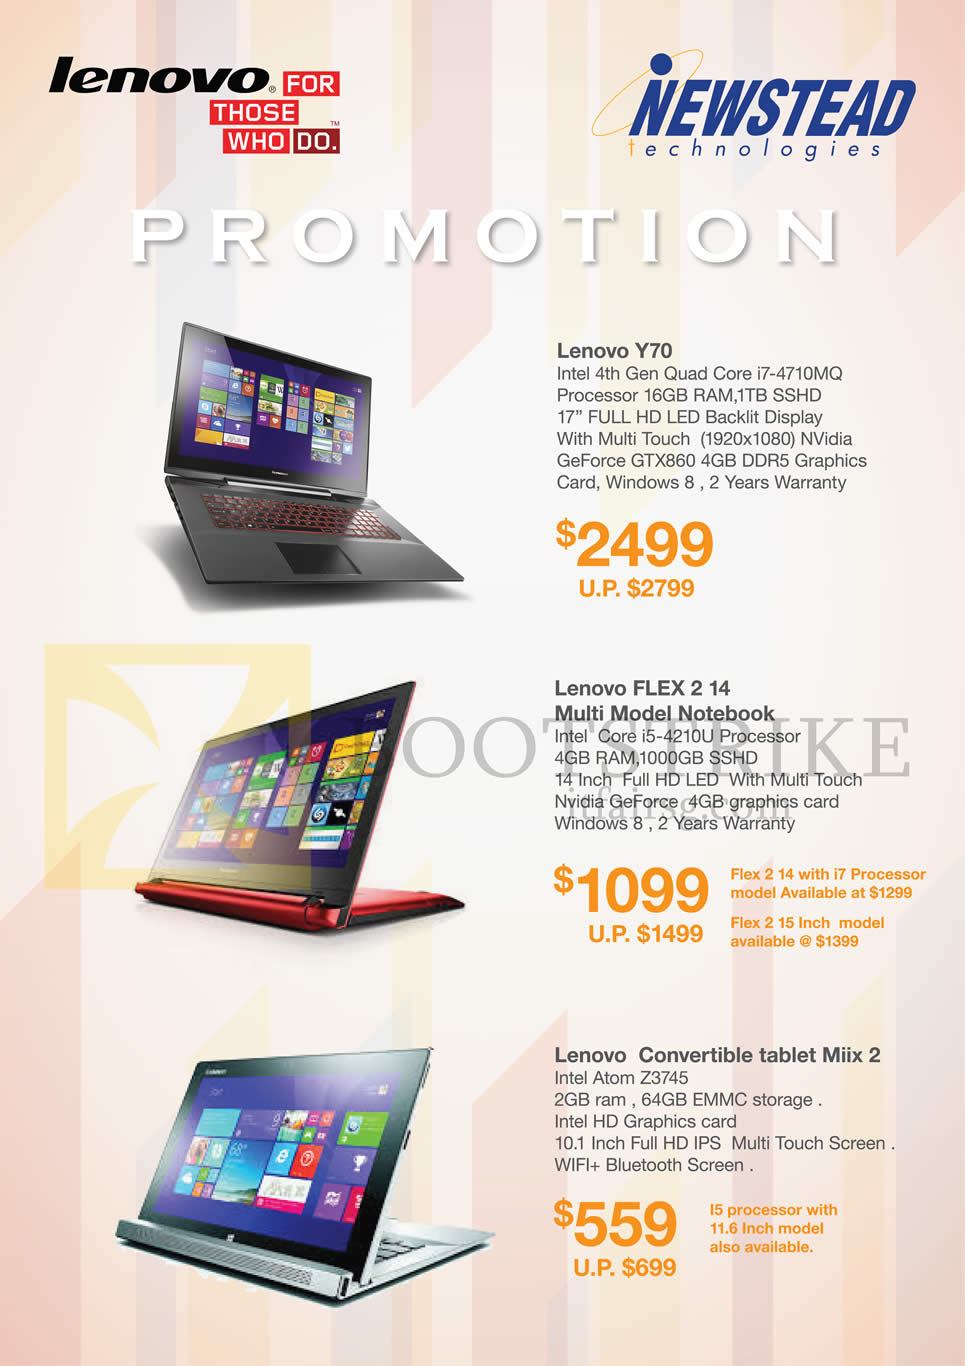 SITEX 2014 price list image brochure of Lenovo Newstead Notebooks Y70, FLEX 2 14, Miix 2